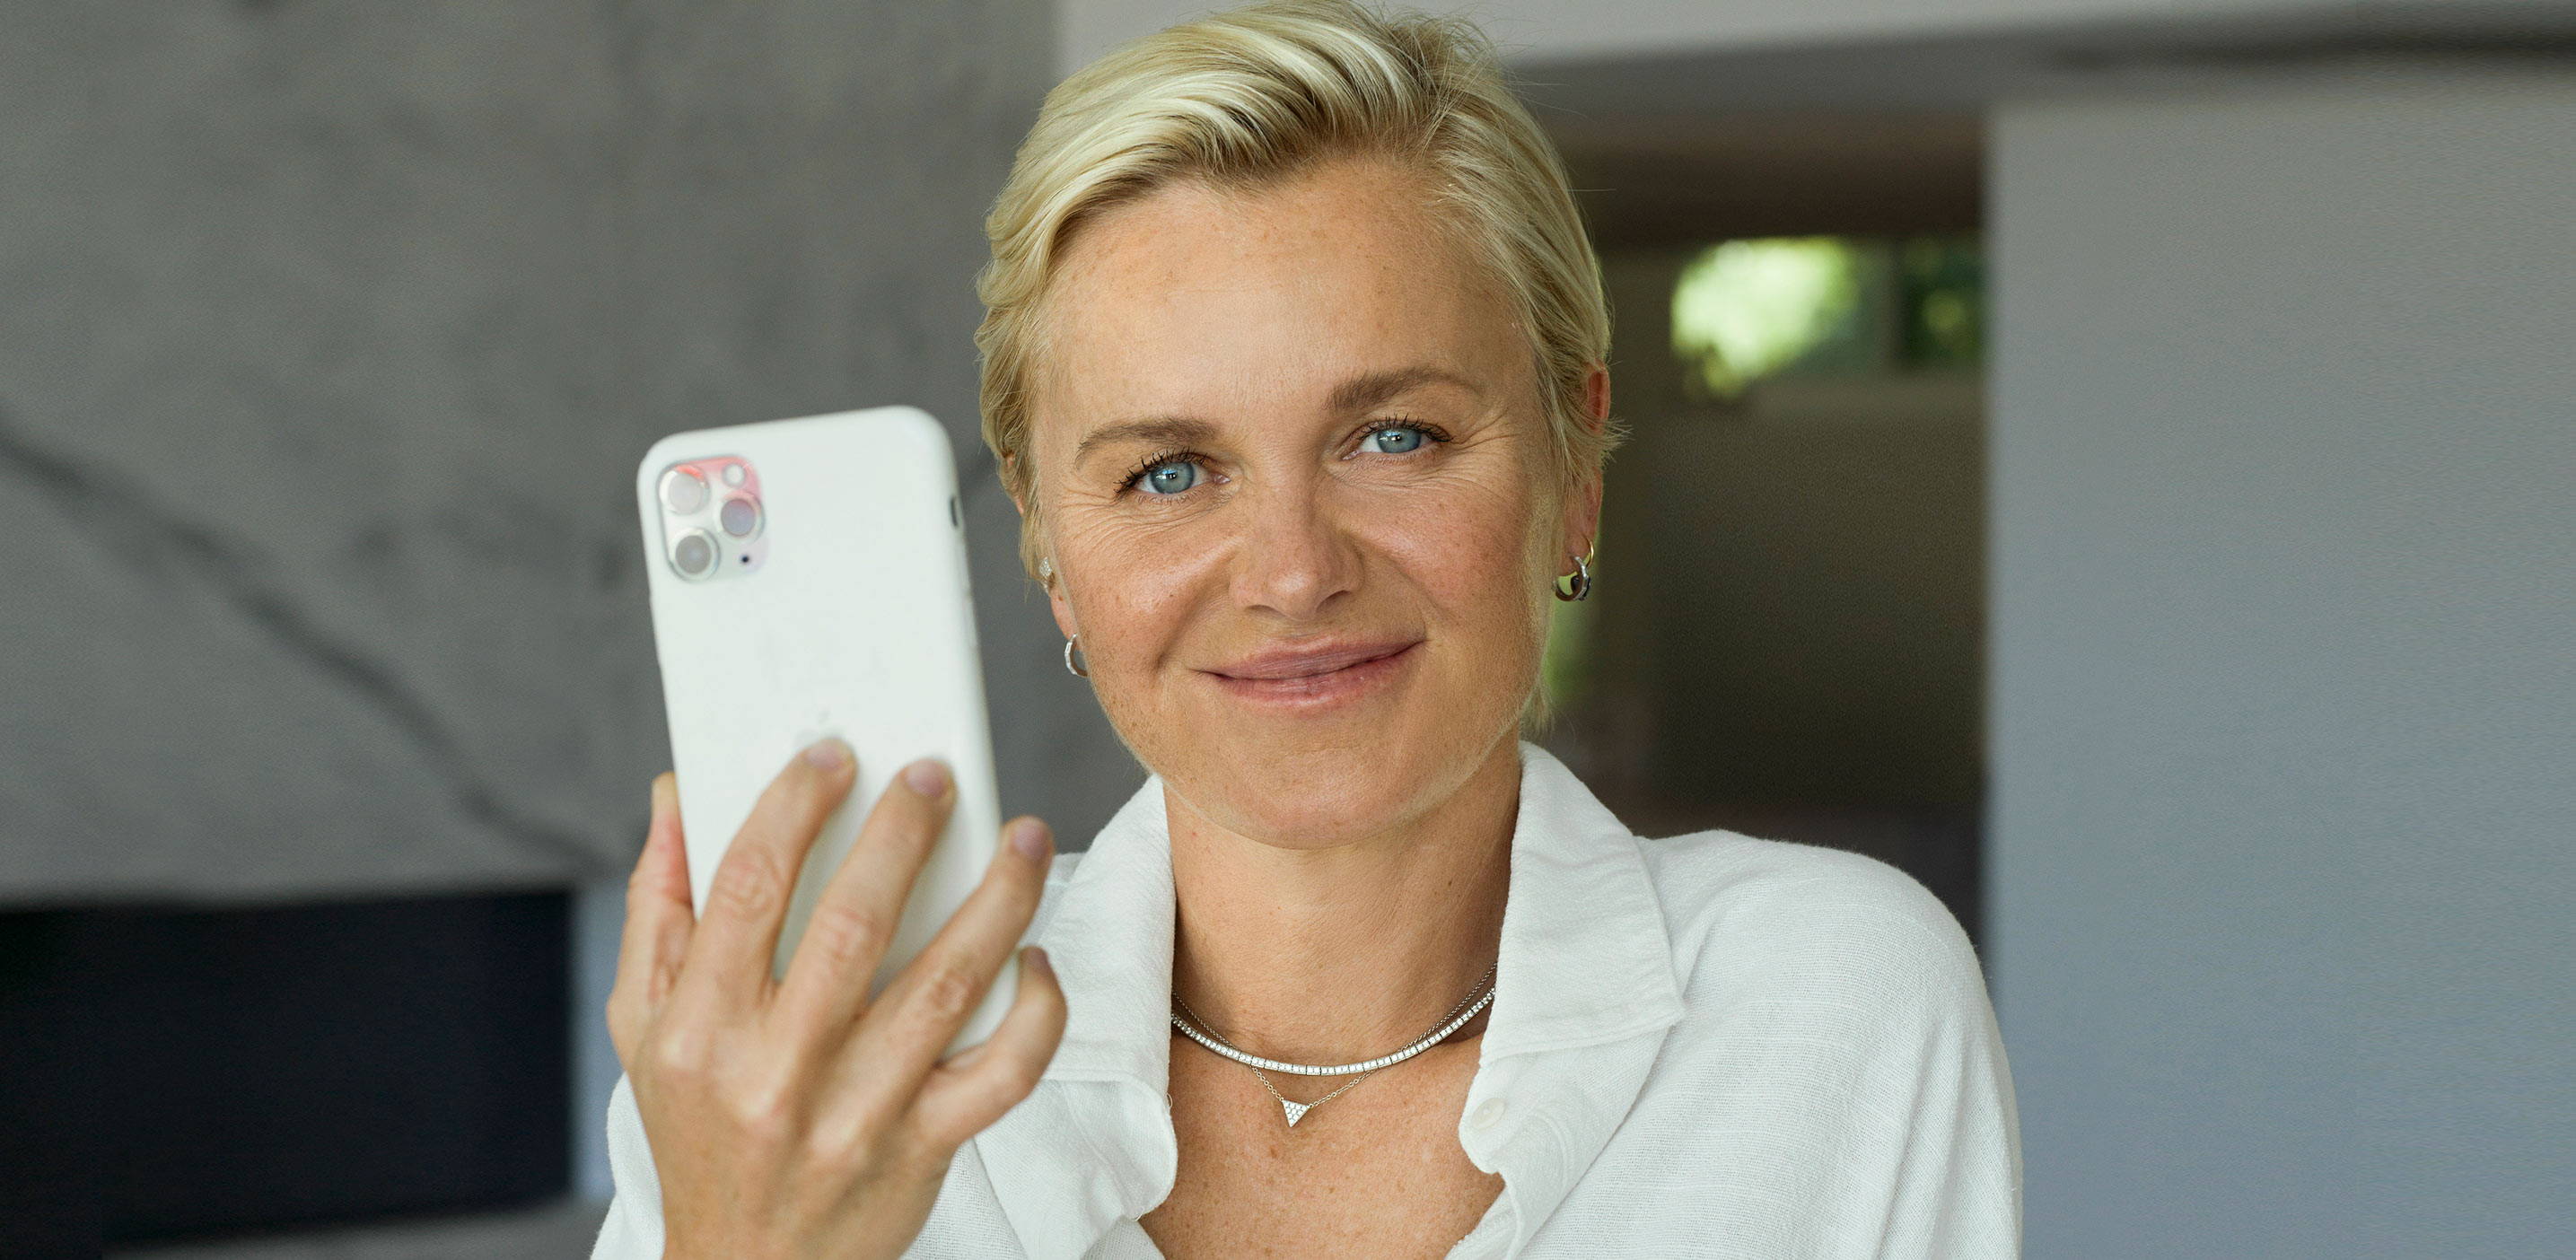 Dr Barbara Sturm portrait image holding a mobile phone